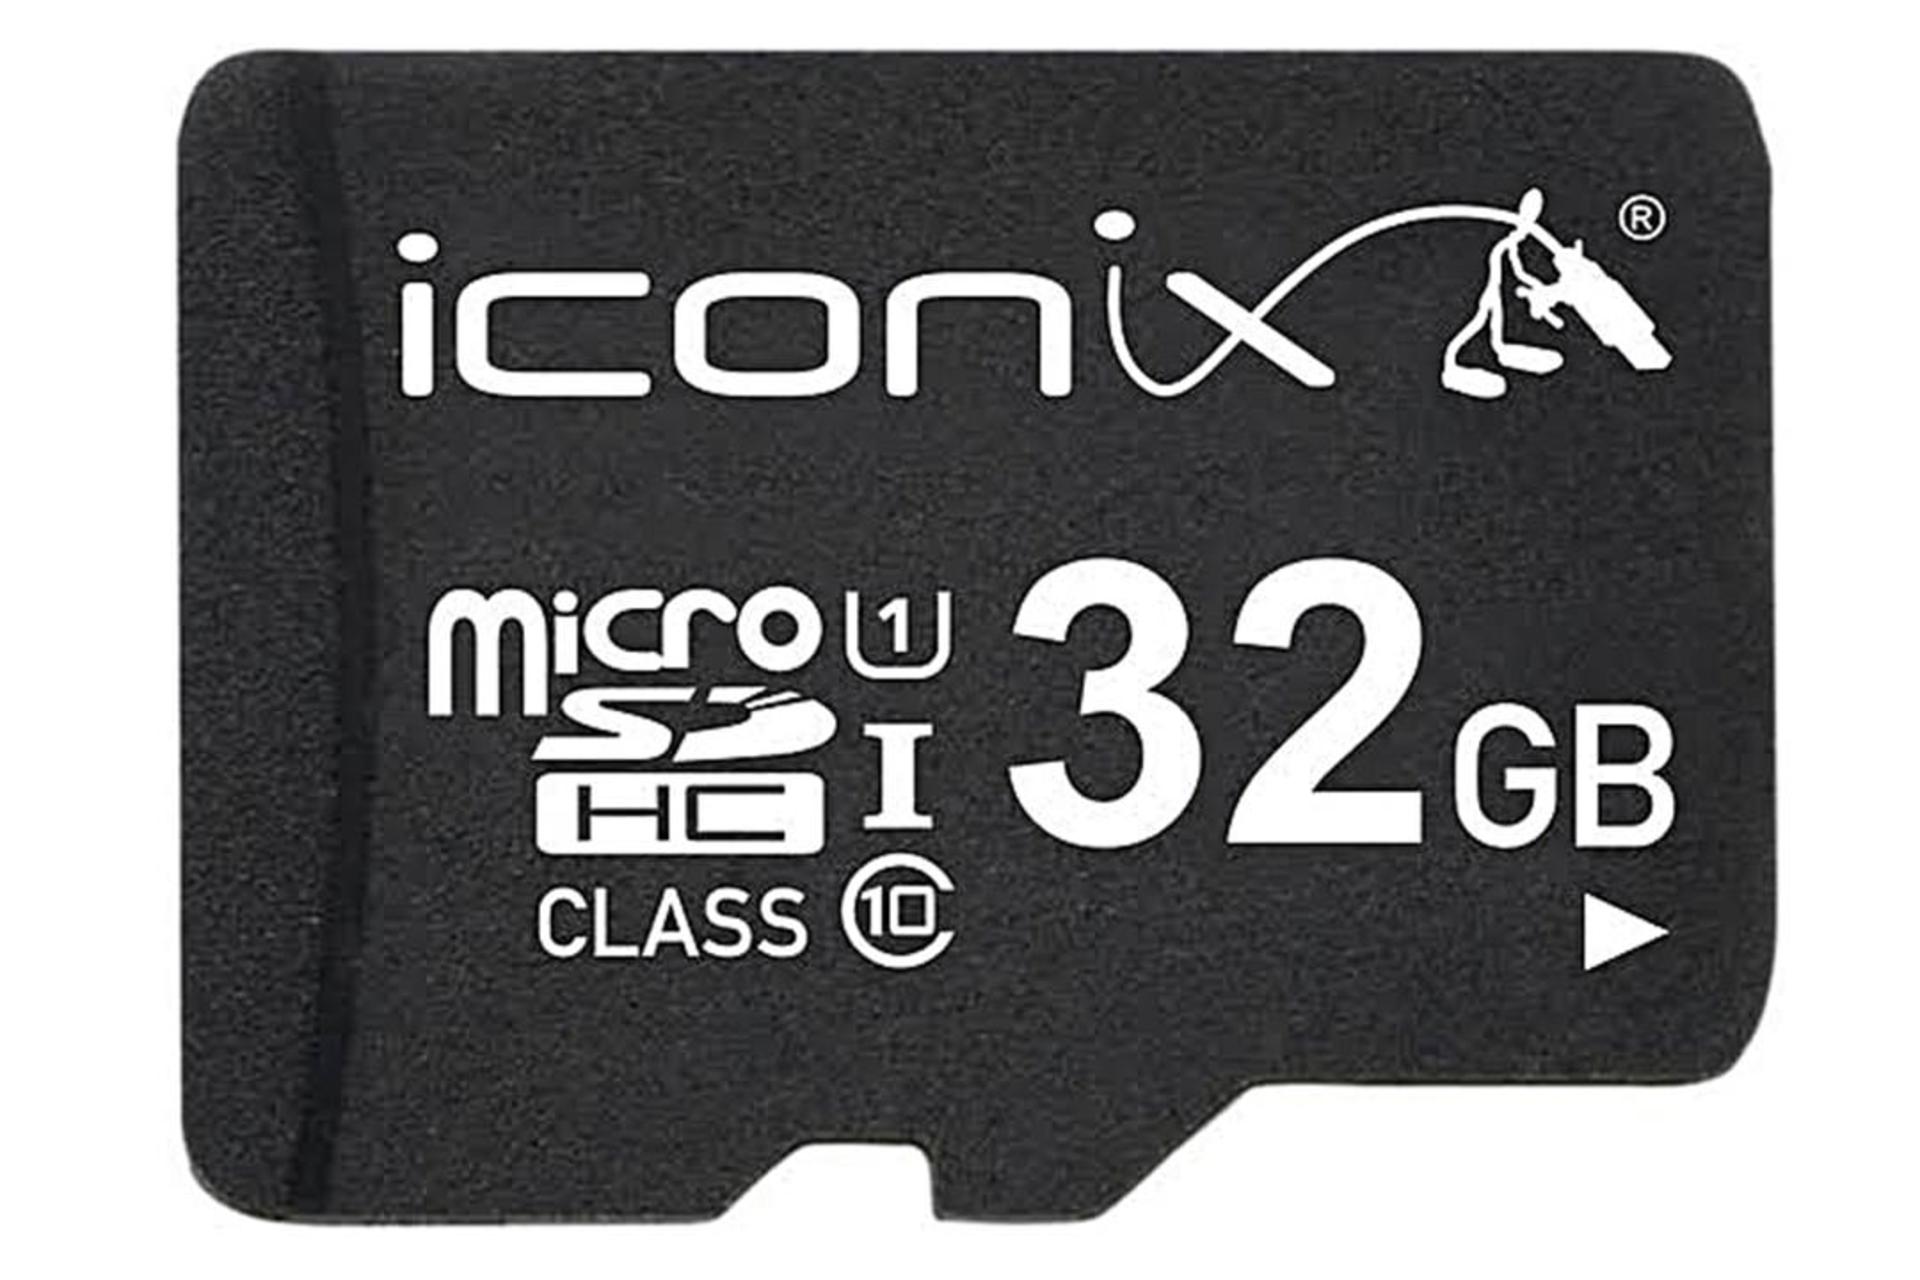 iconix Super Speed microSDXC Class 10 UHS-I U3 32GB